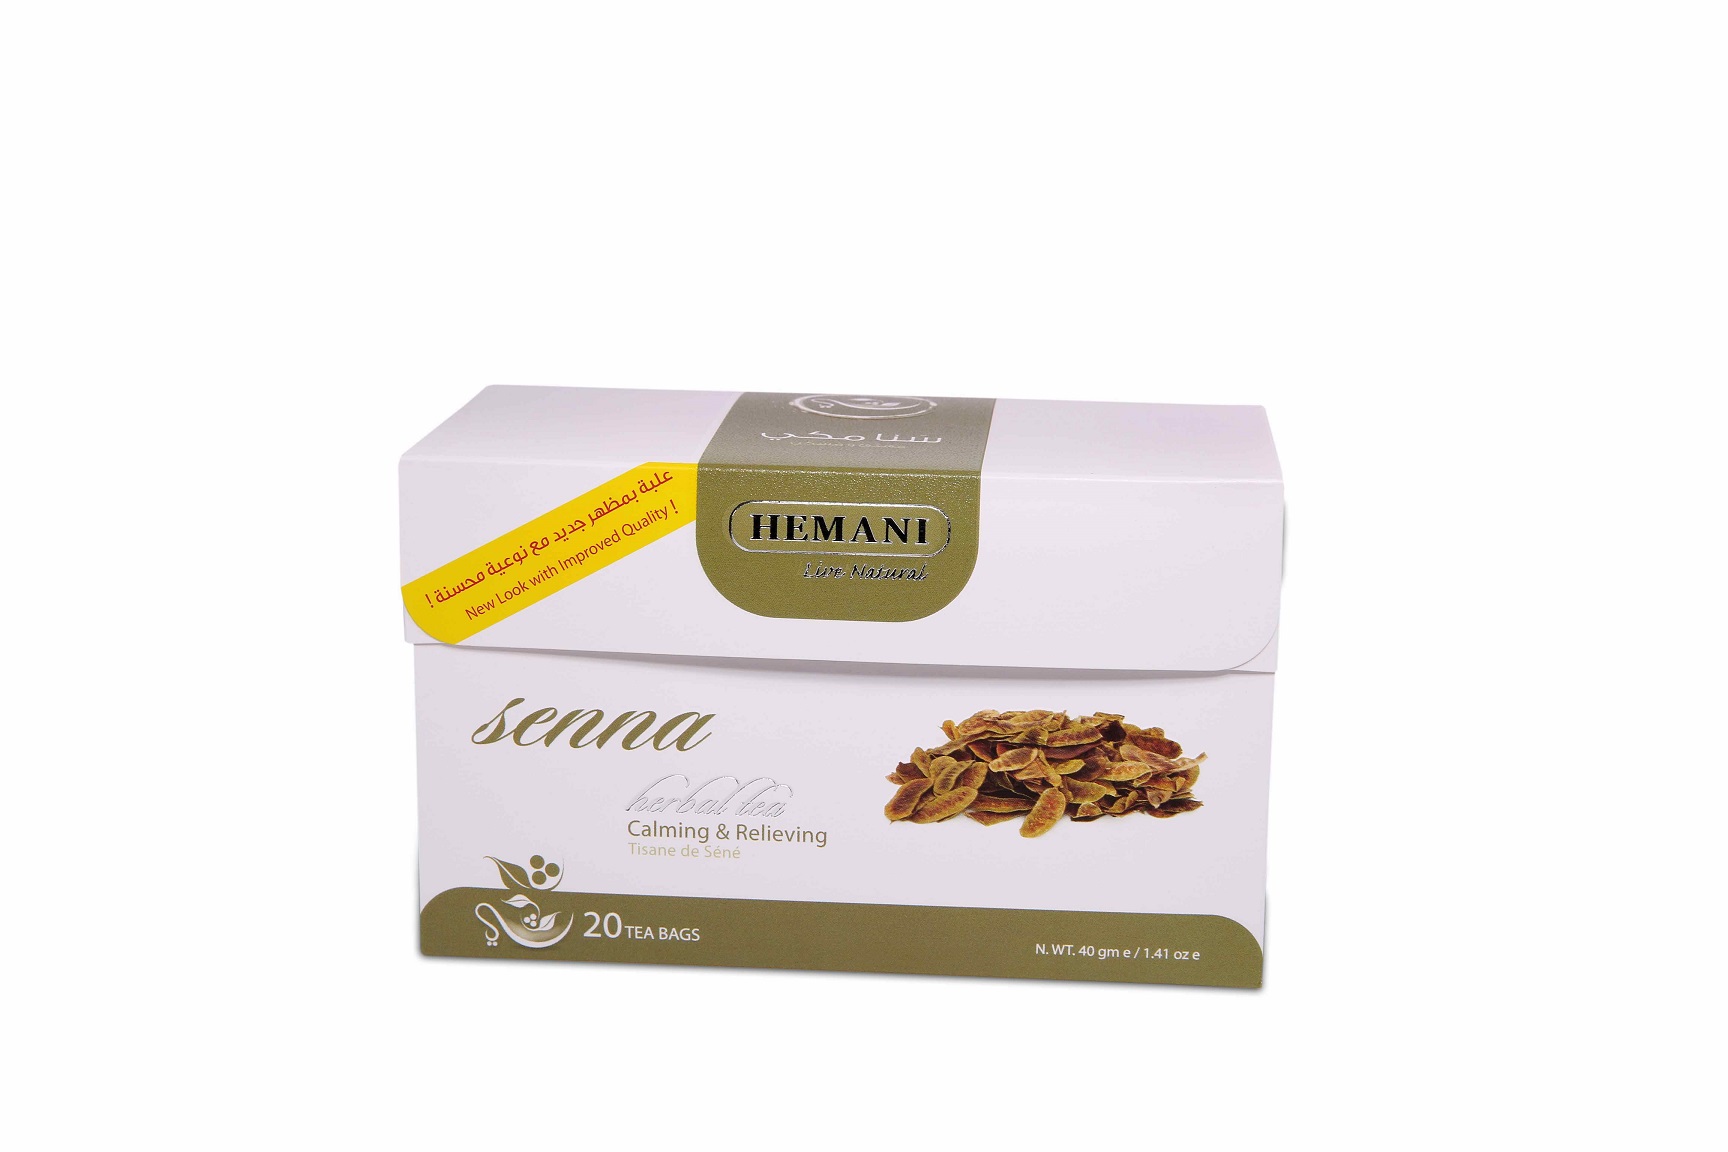 Senna Herbal Tea